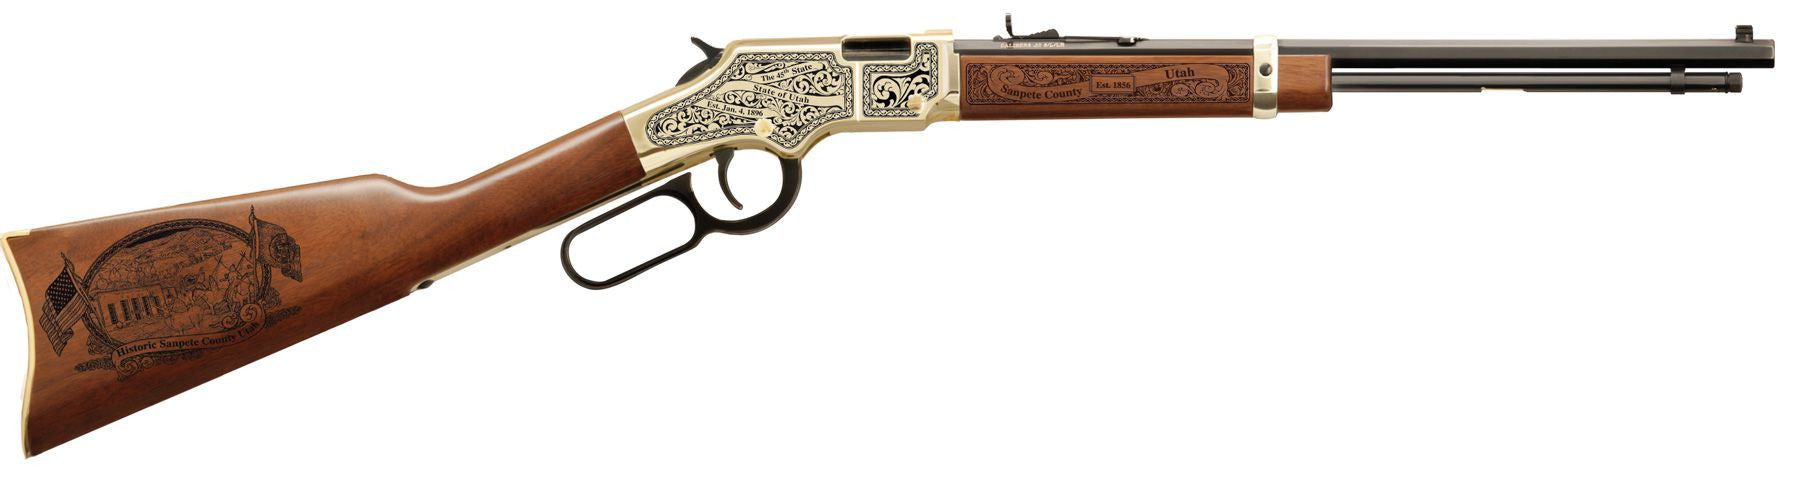 sanpete county utah engraved rifle h004